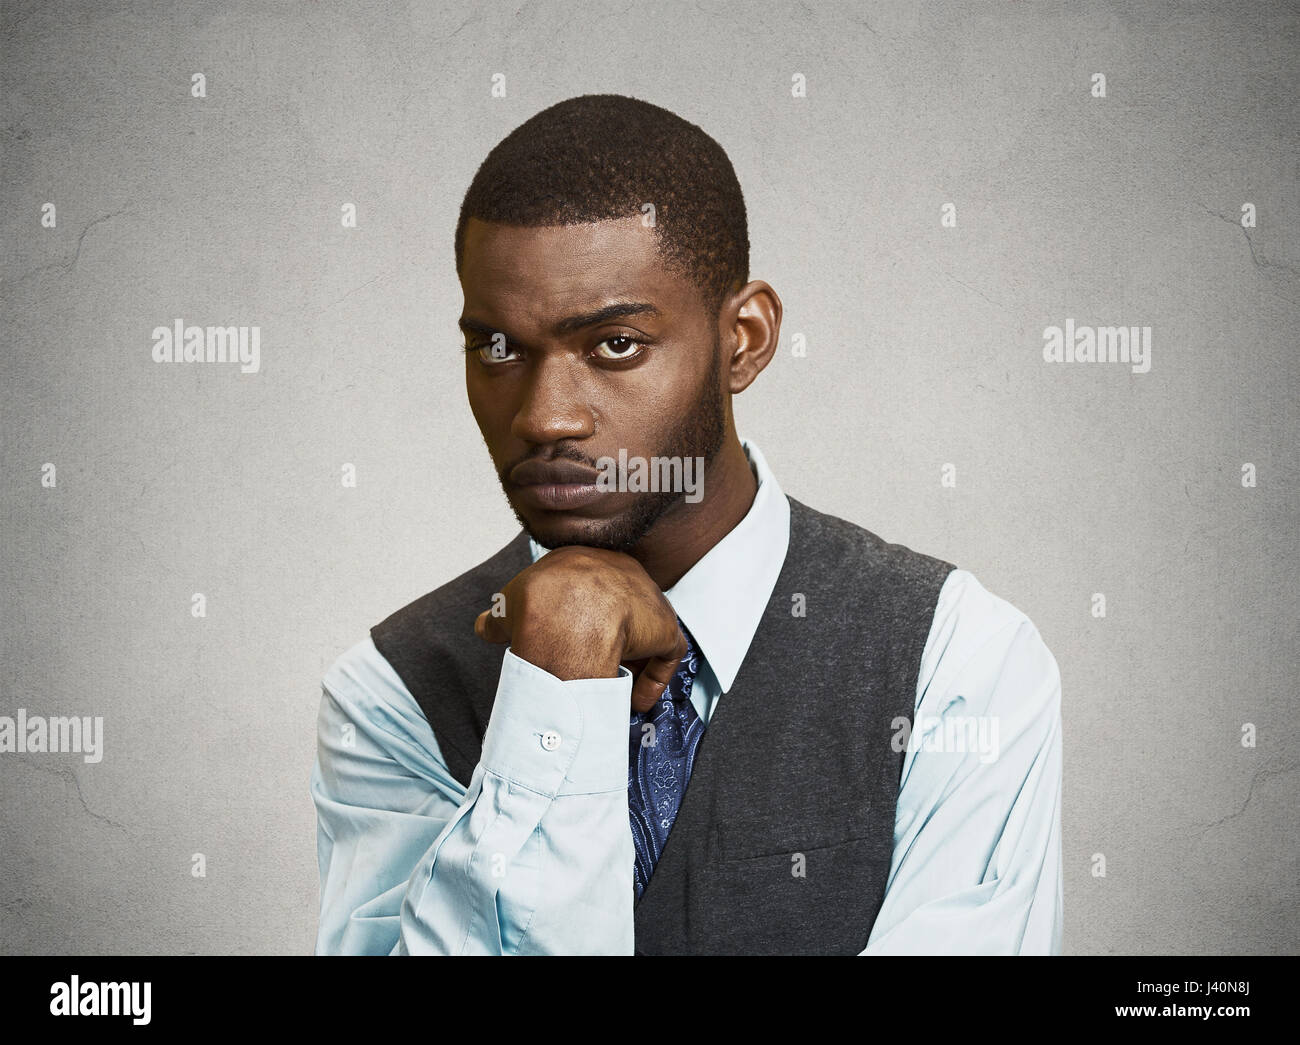 Closeup portrait man with sad expression, isolated on grey, black background. Human emotions, body language, life perception Stock Photo